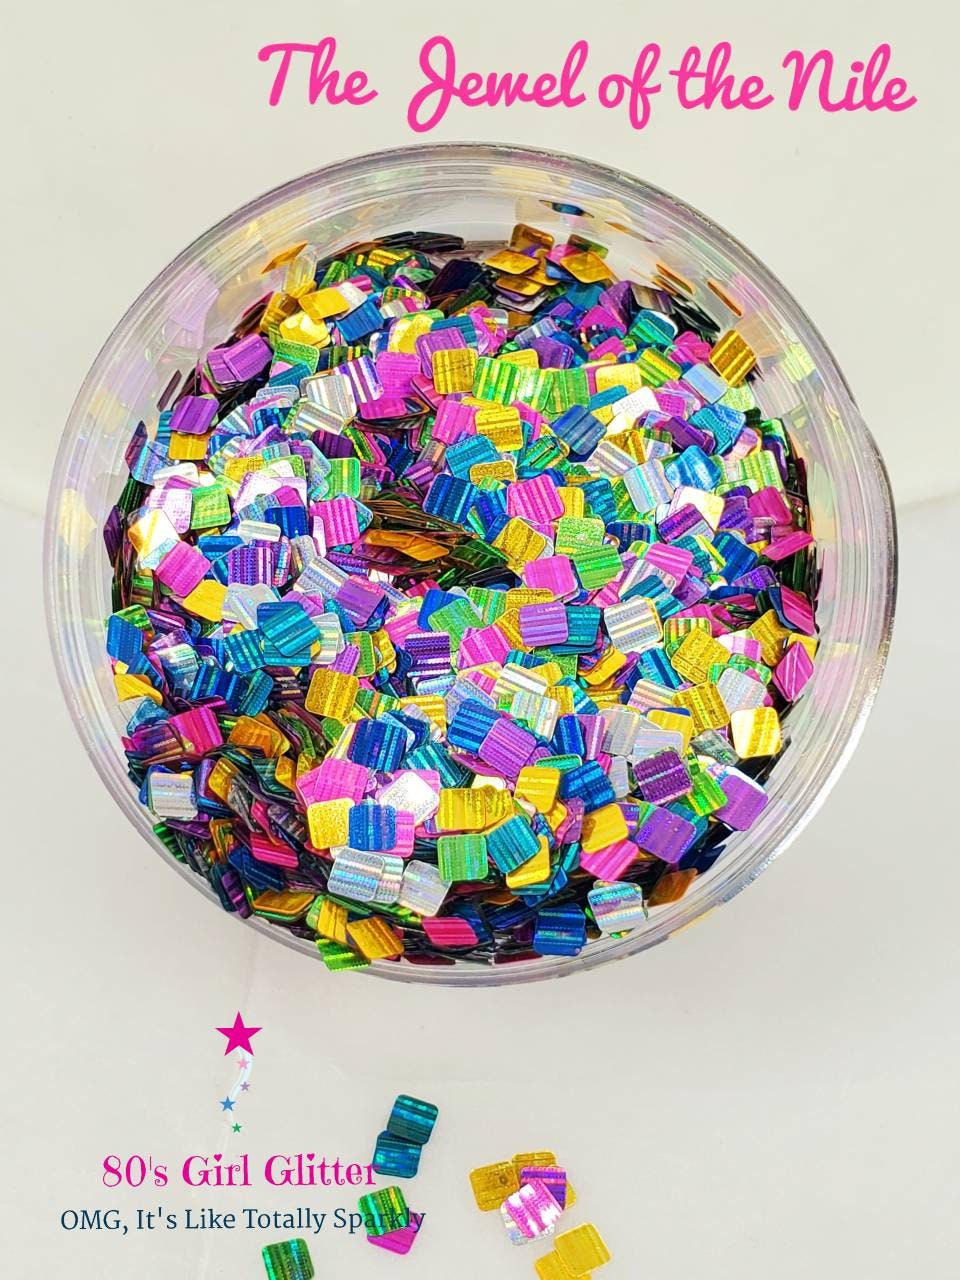 Glitter, Polyester Glitter, Fine Glitter, Pretty Purple, Tumbler Glitter,  Crafts, Craft Glitter, High Quality Glitter,holographic Glitter 